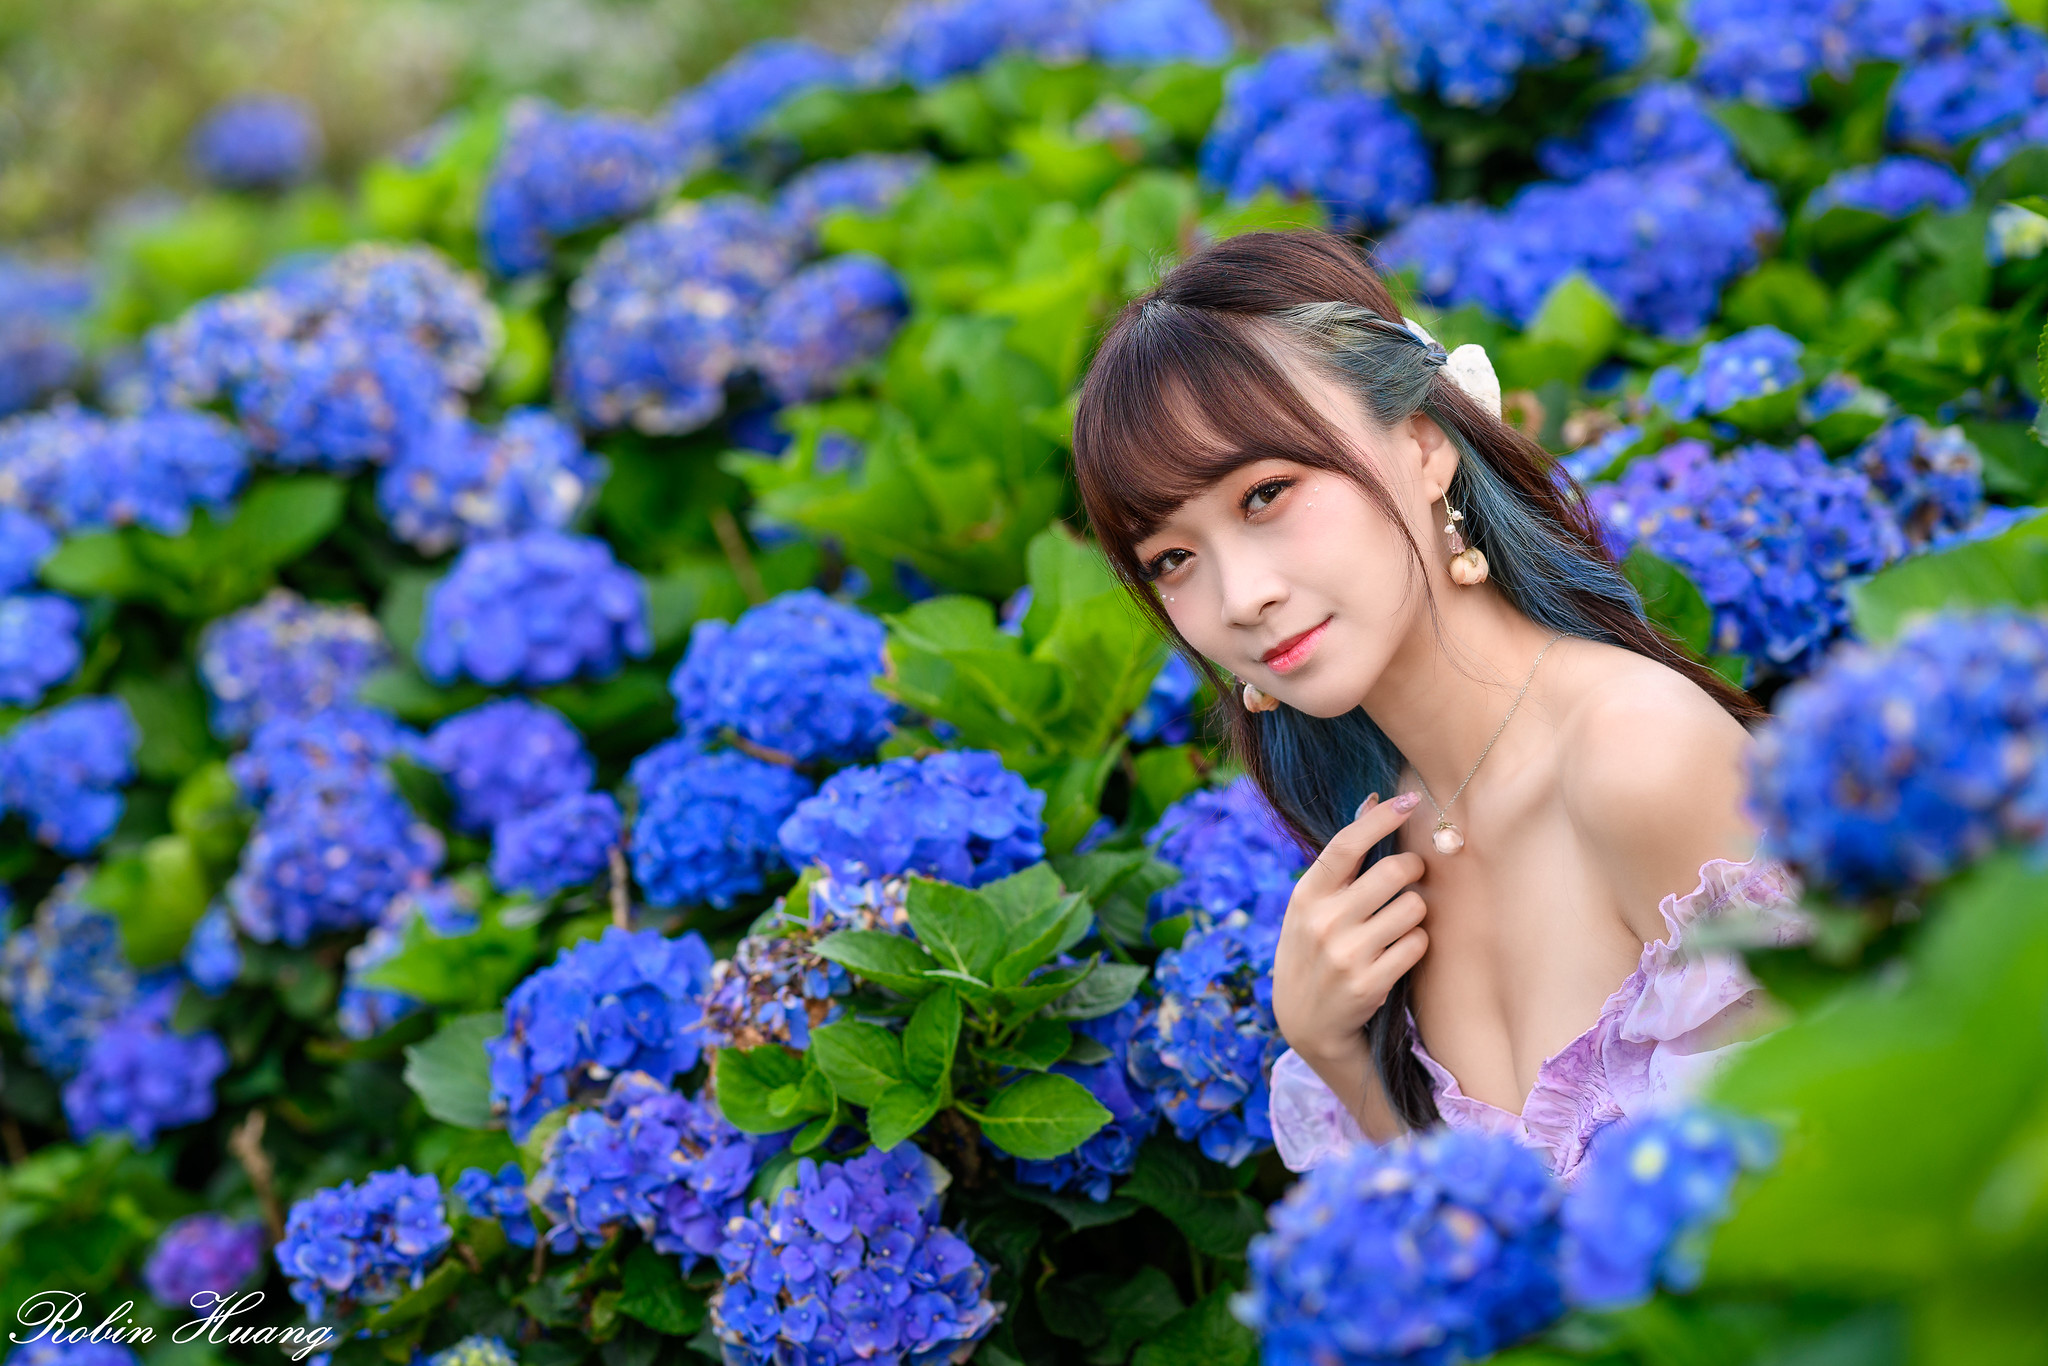 Robin Huang Women Asian Brunette Makeup Glamour Dress Purple Clothing Portrait Flowers Leaves Plants 2048x1366